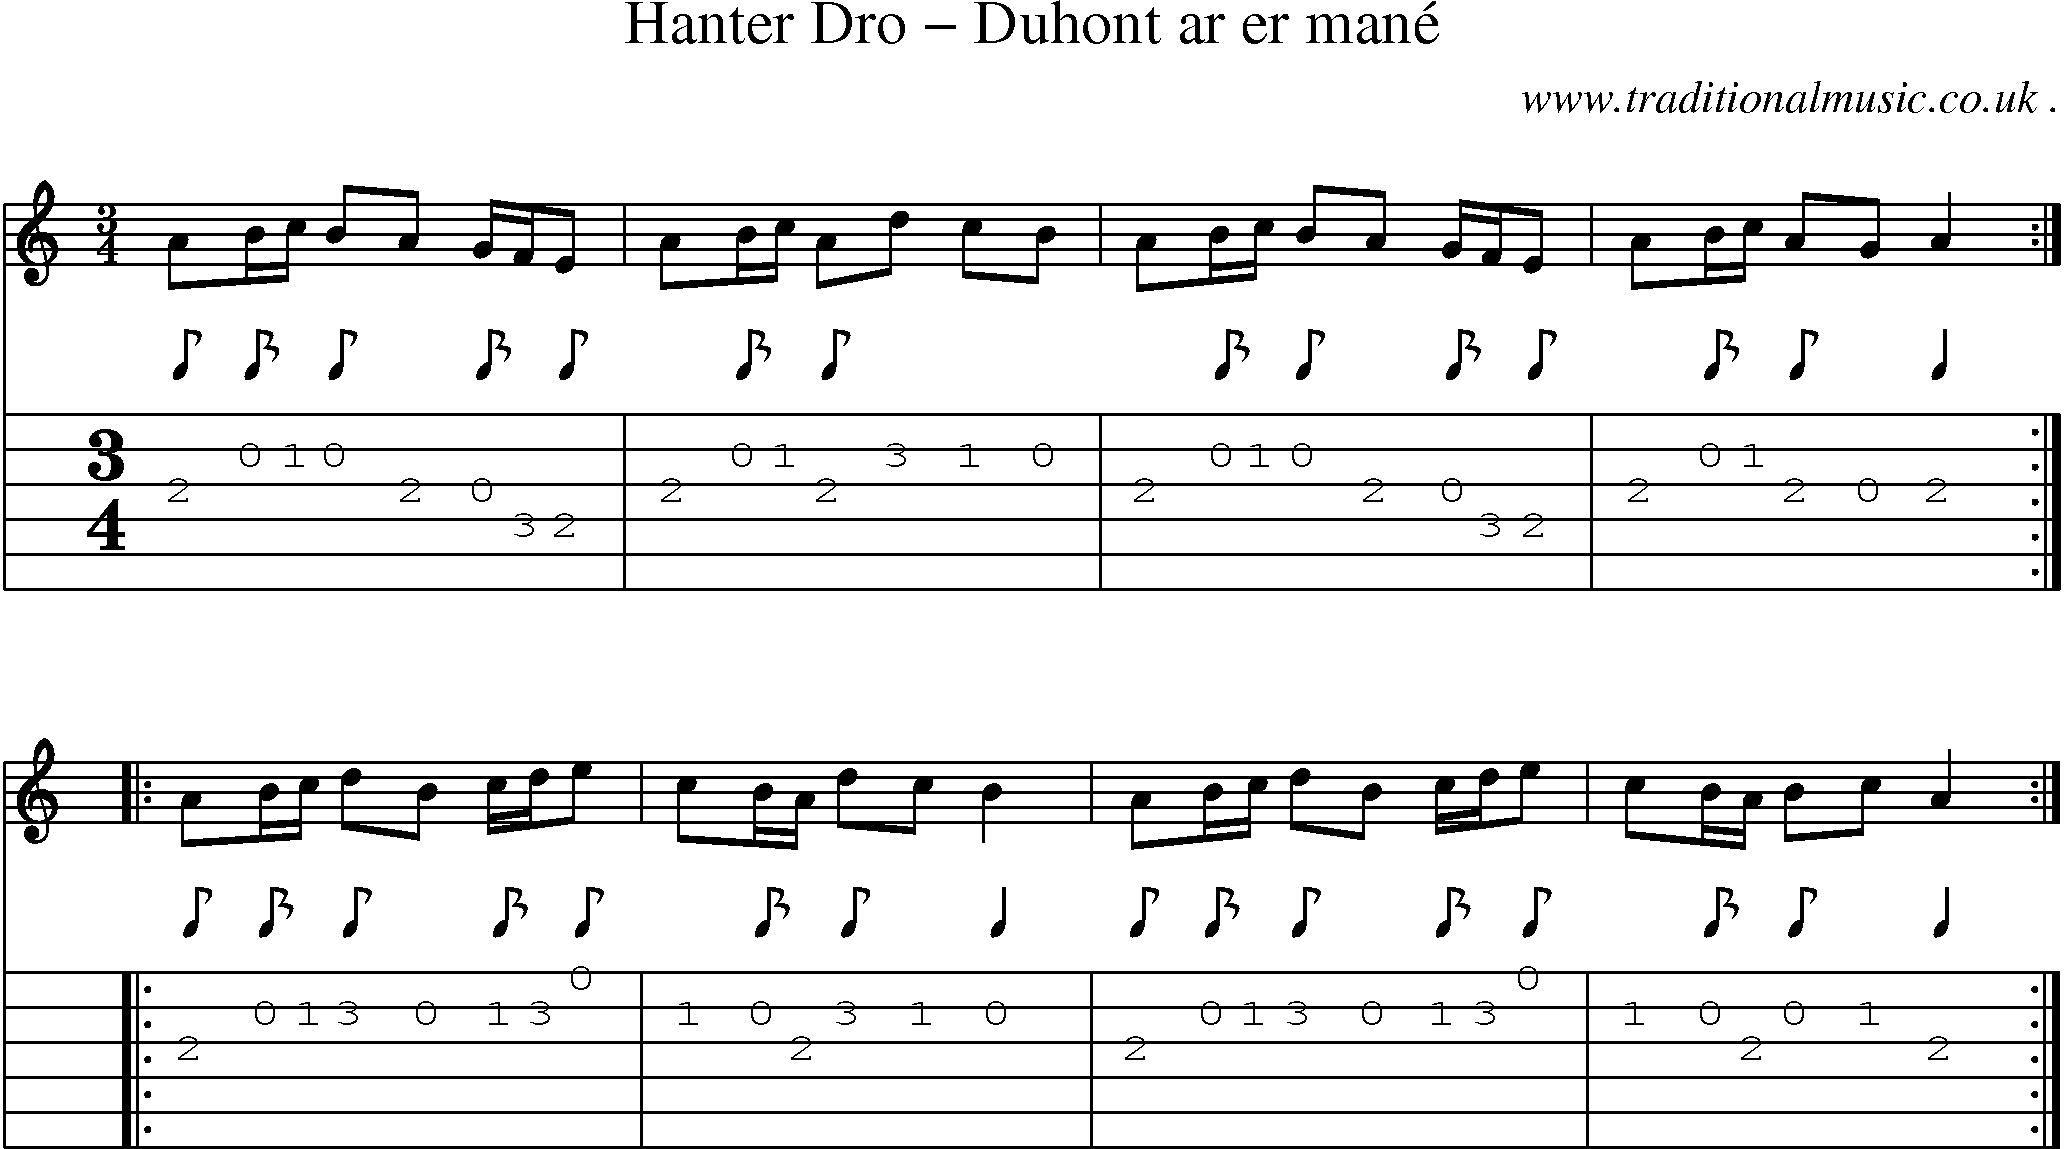 Sheet-Music and Guitar Tabs for Hanter Dro Duhont Ar Er Mane